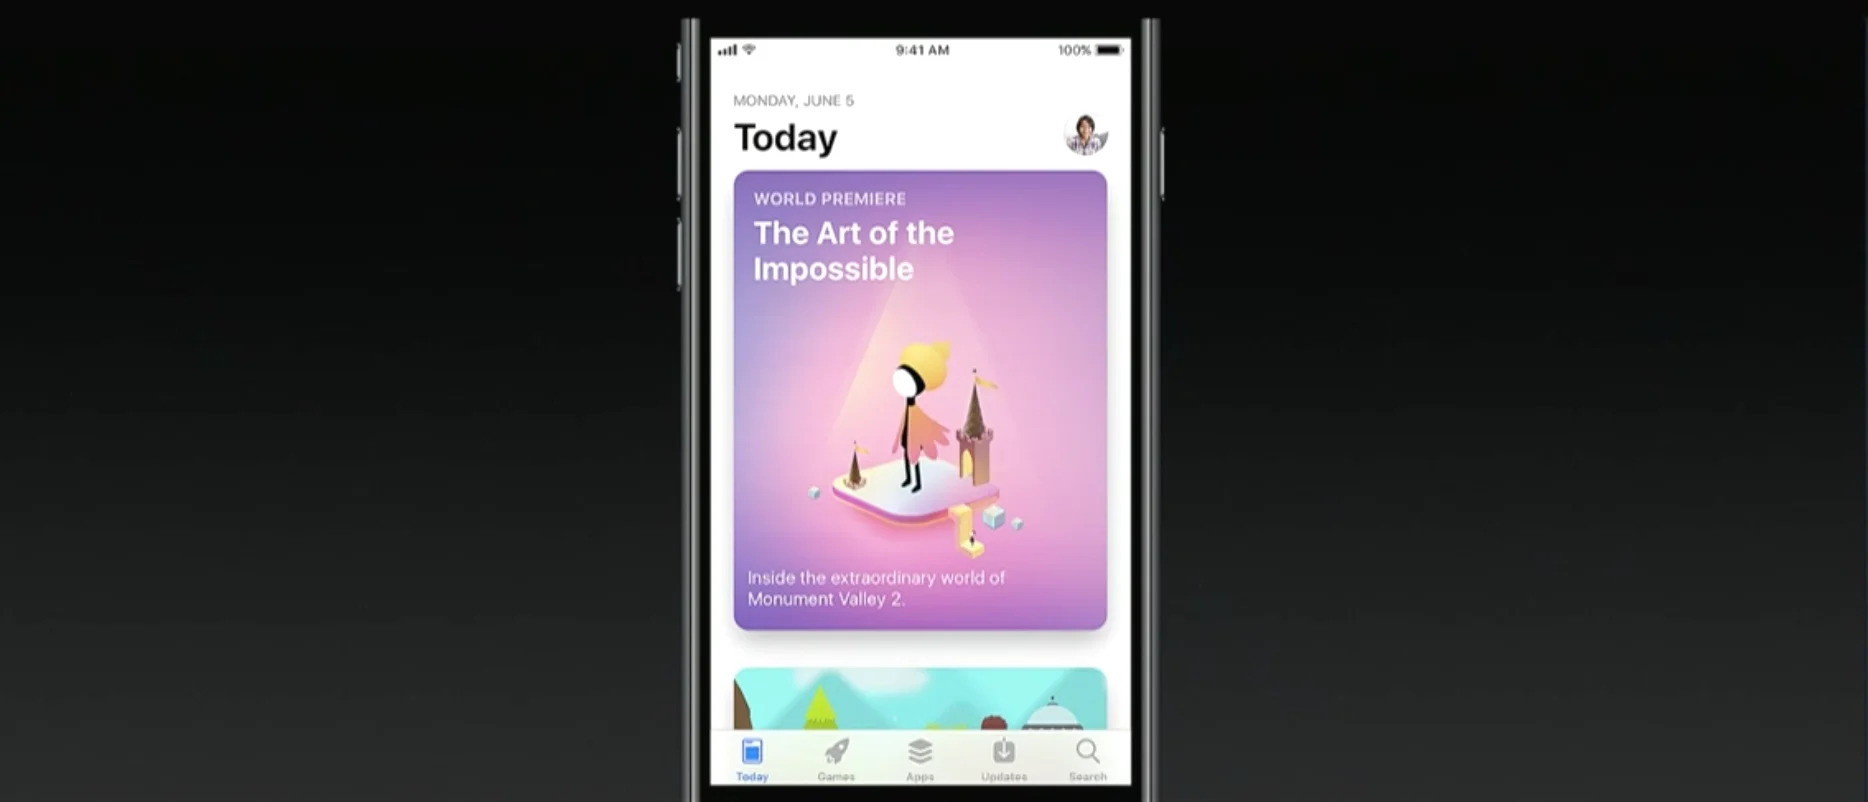 Apple полностью обновила магазин приложений App Store - фото 1